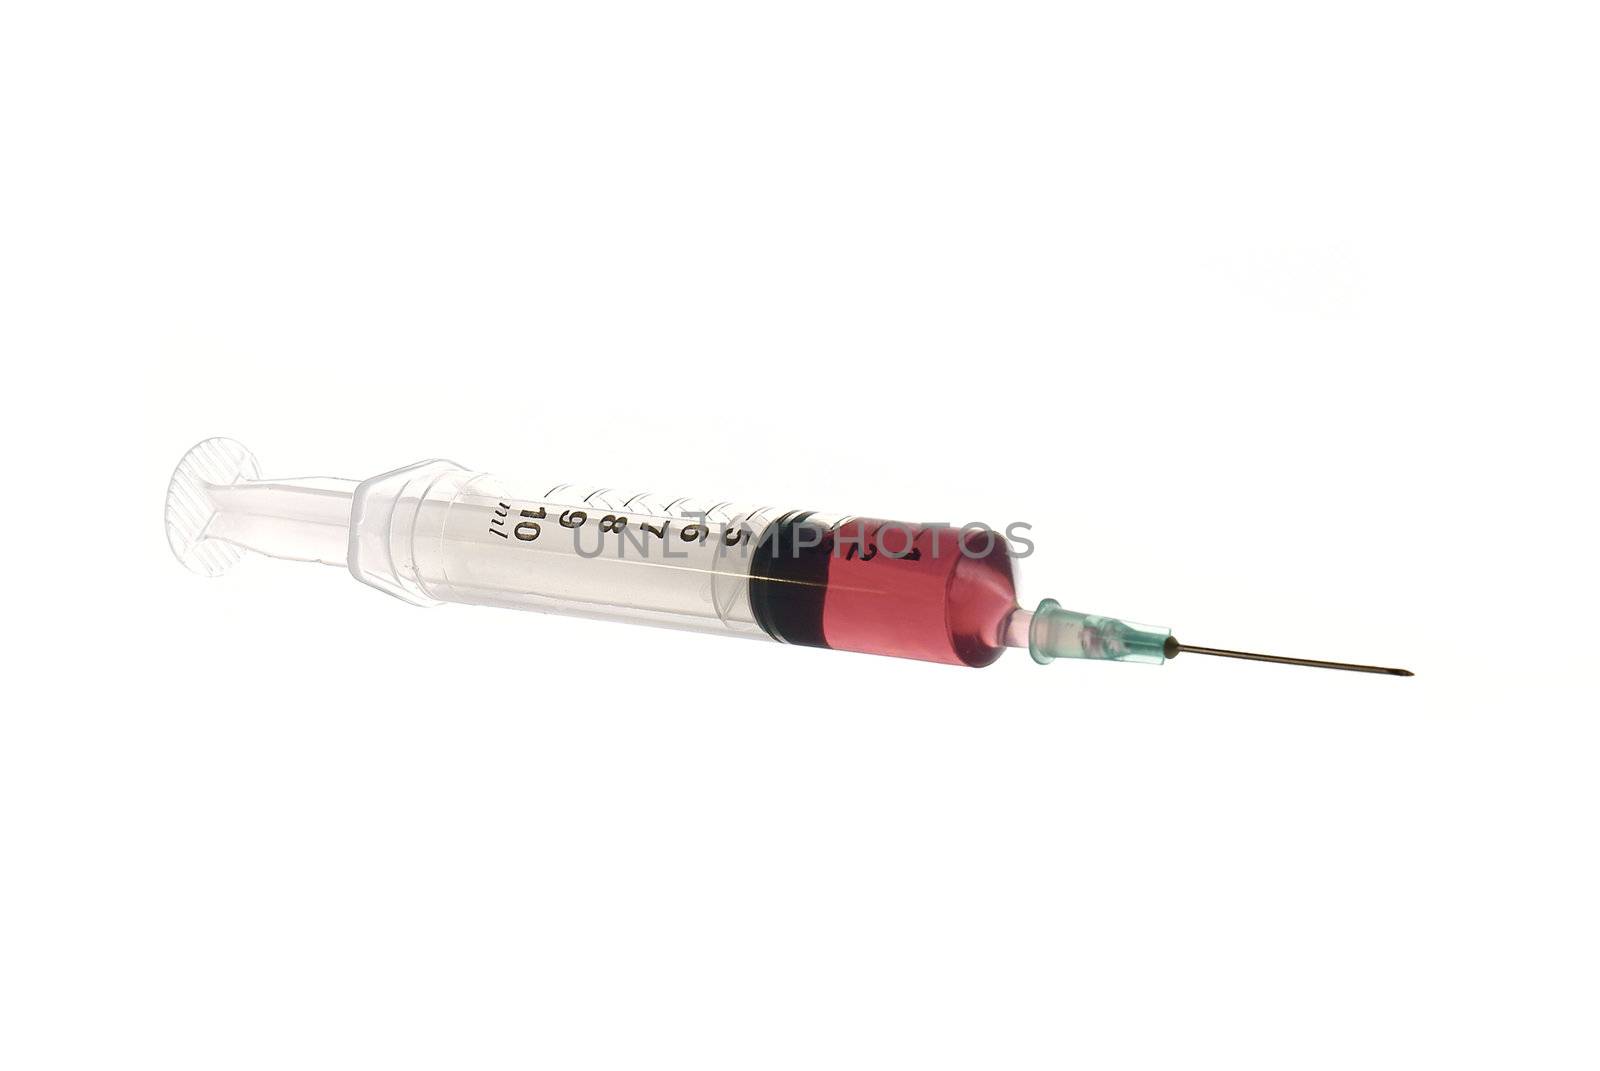 Syringe by stupie